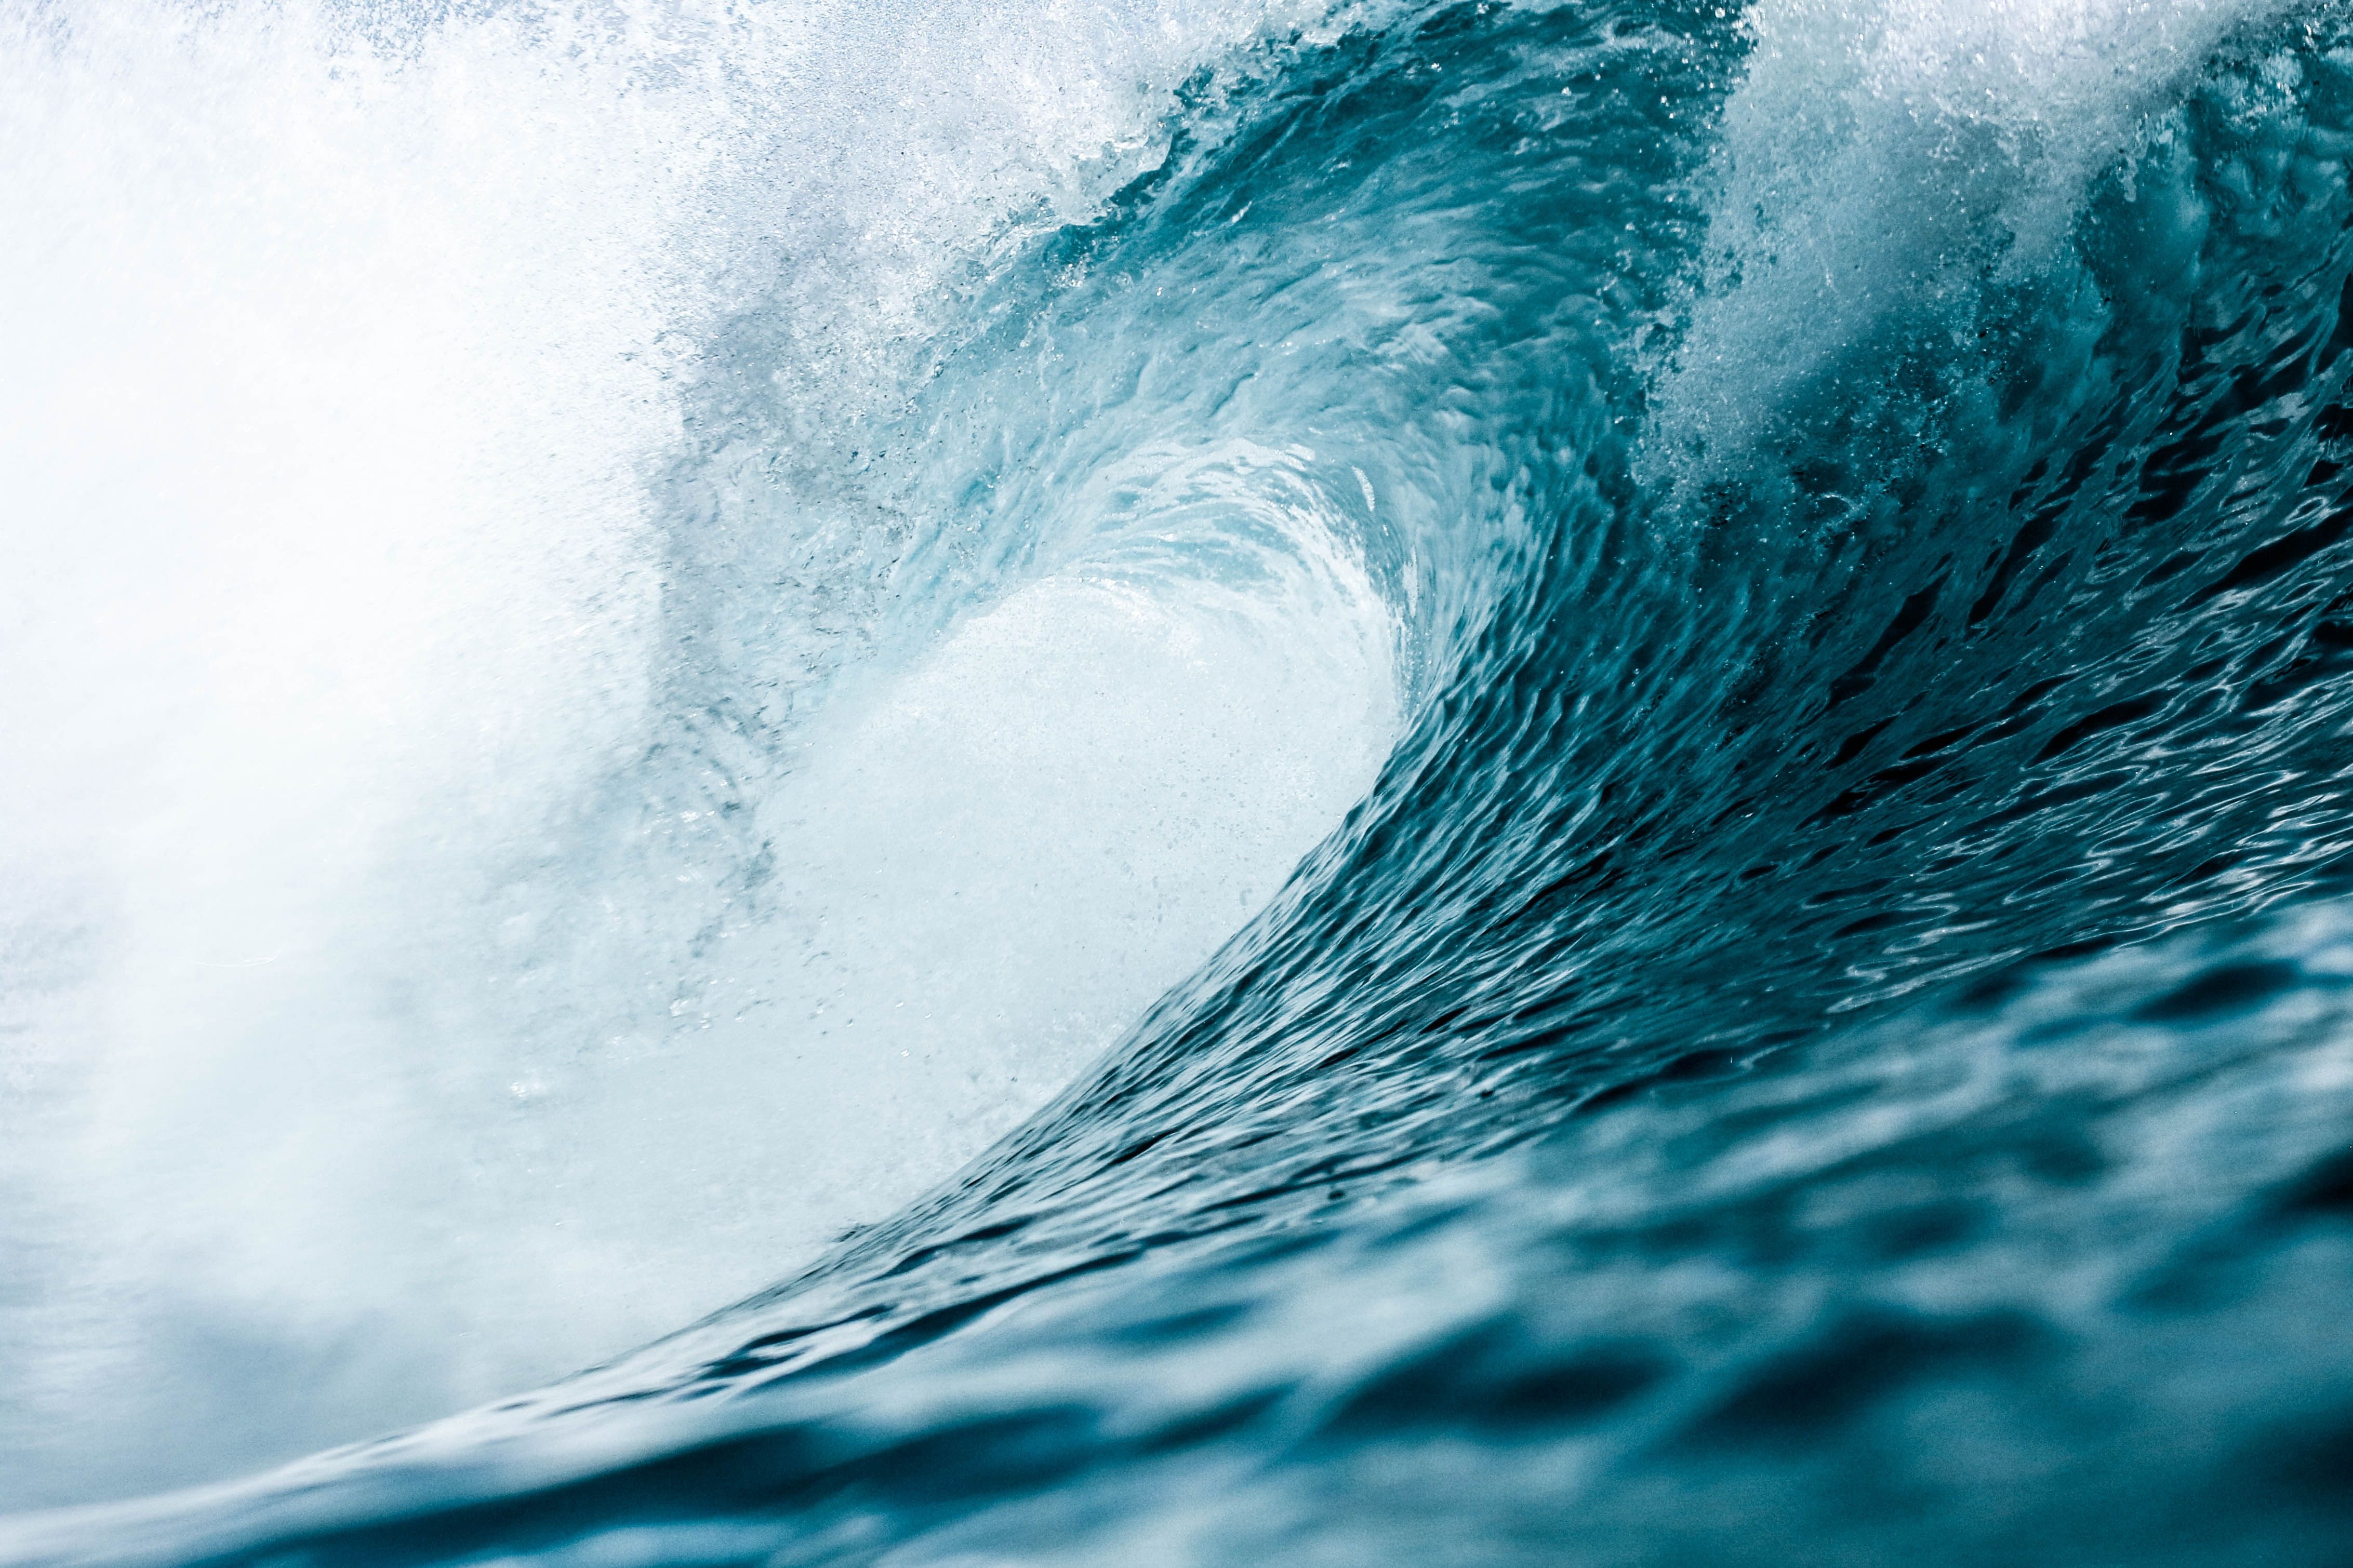 4529x3019 #sea wave, #desktop wallpaper, #surfing, #surf wave, #amazing wallpaper, #nature background, #surf, #summer background, #nature wallpaper, #ocean, #ocean foam, #wave, #desktop background, #water, #spiral wave, #wallpaper, #summer